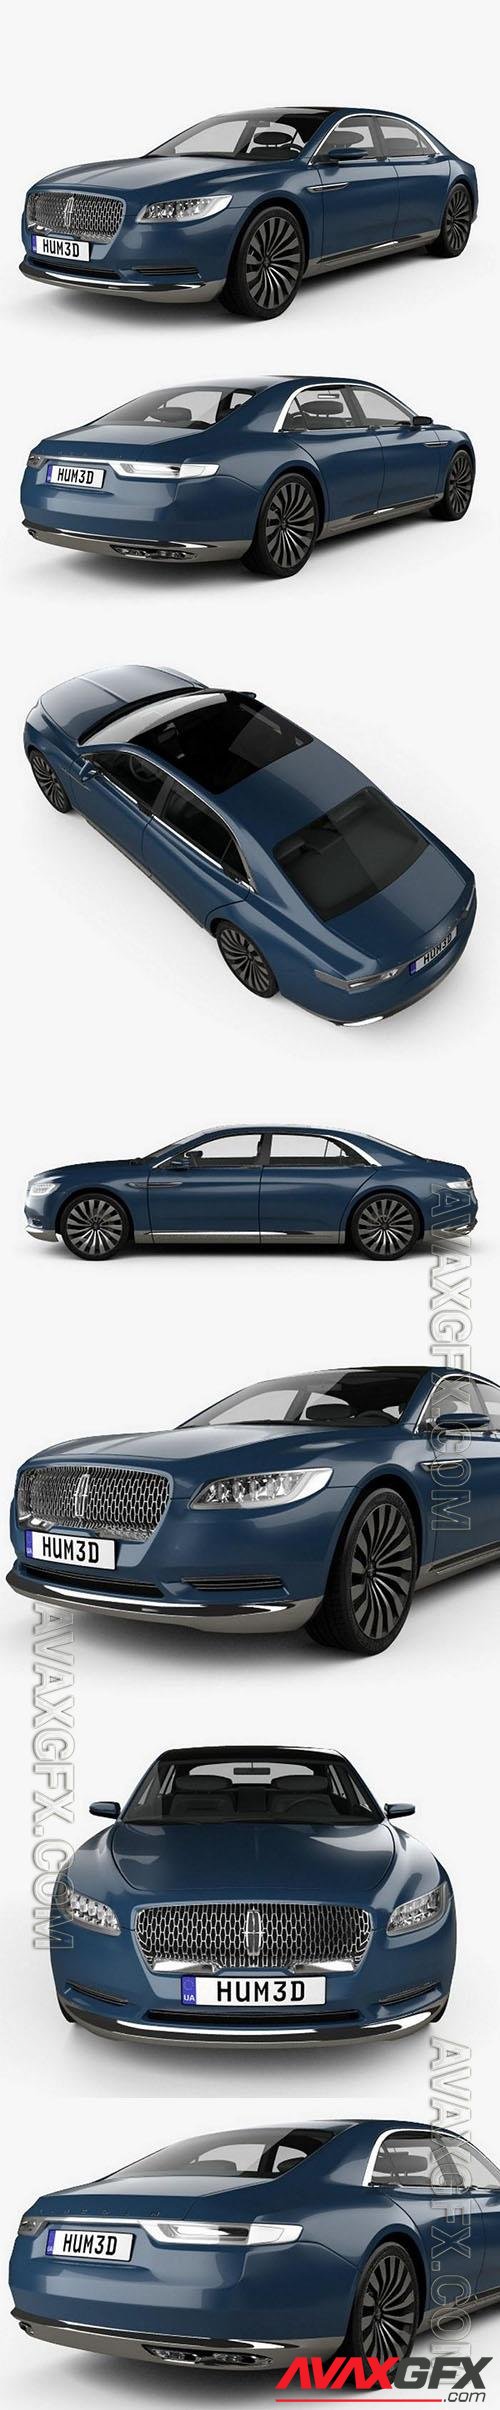 Lincoln Continental concept 2017 - 3d model